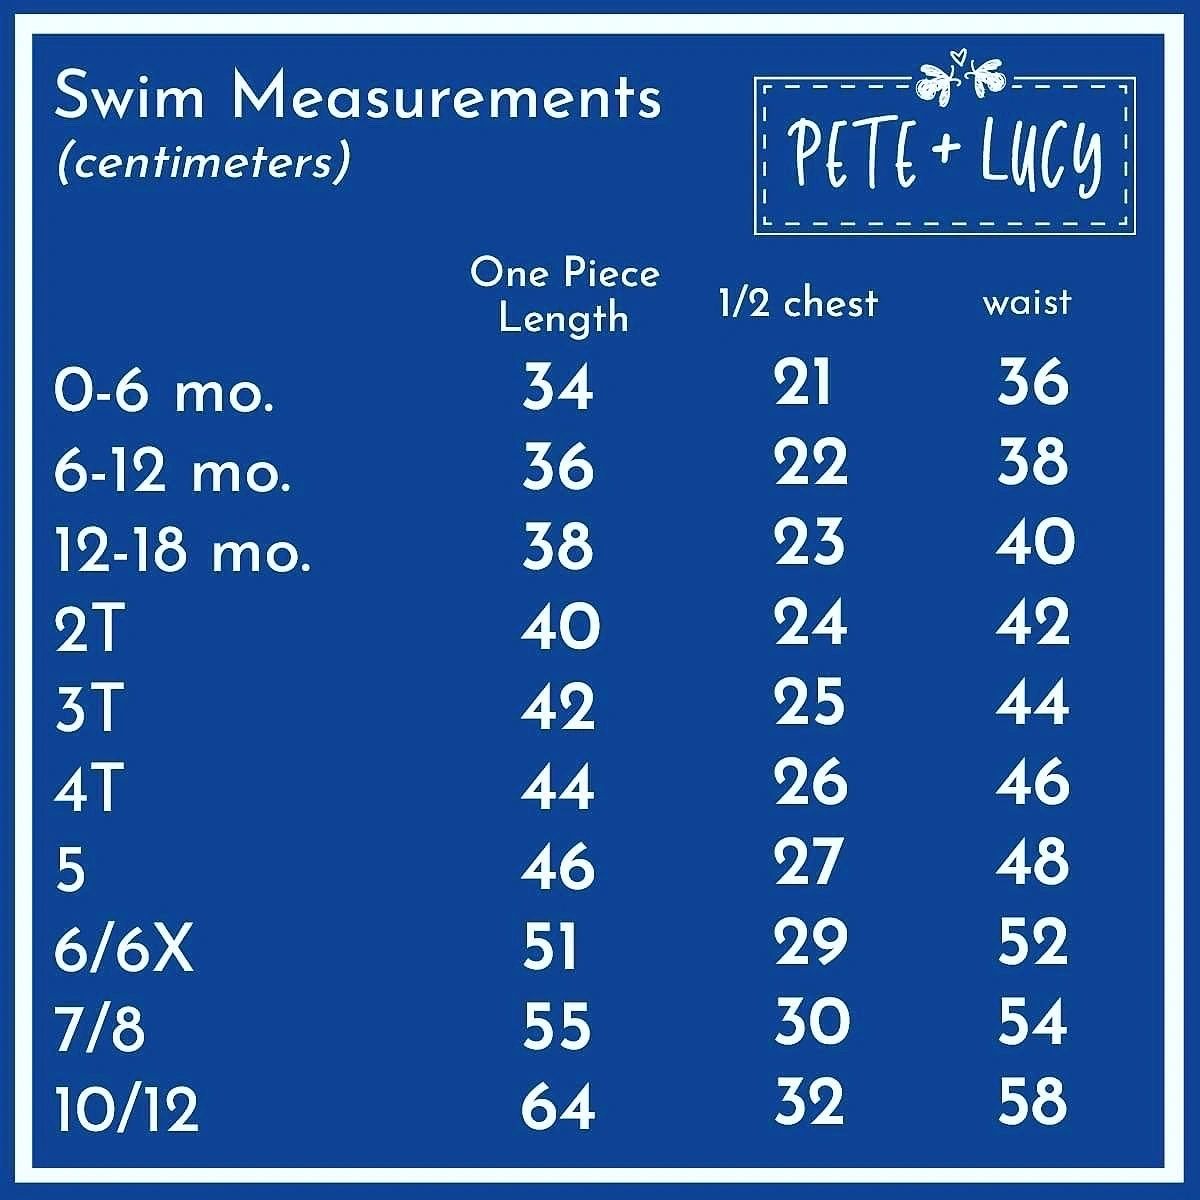 July 4th Swim Shorts - 10/12